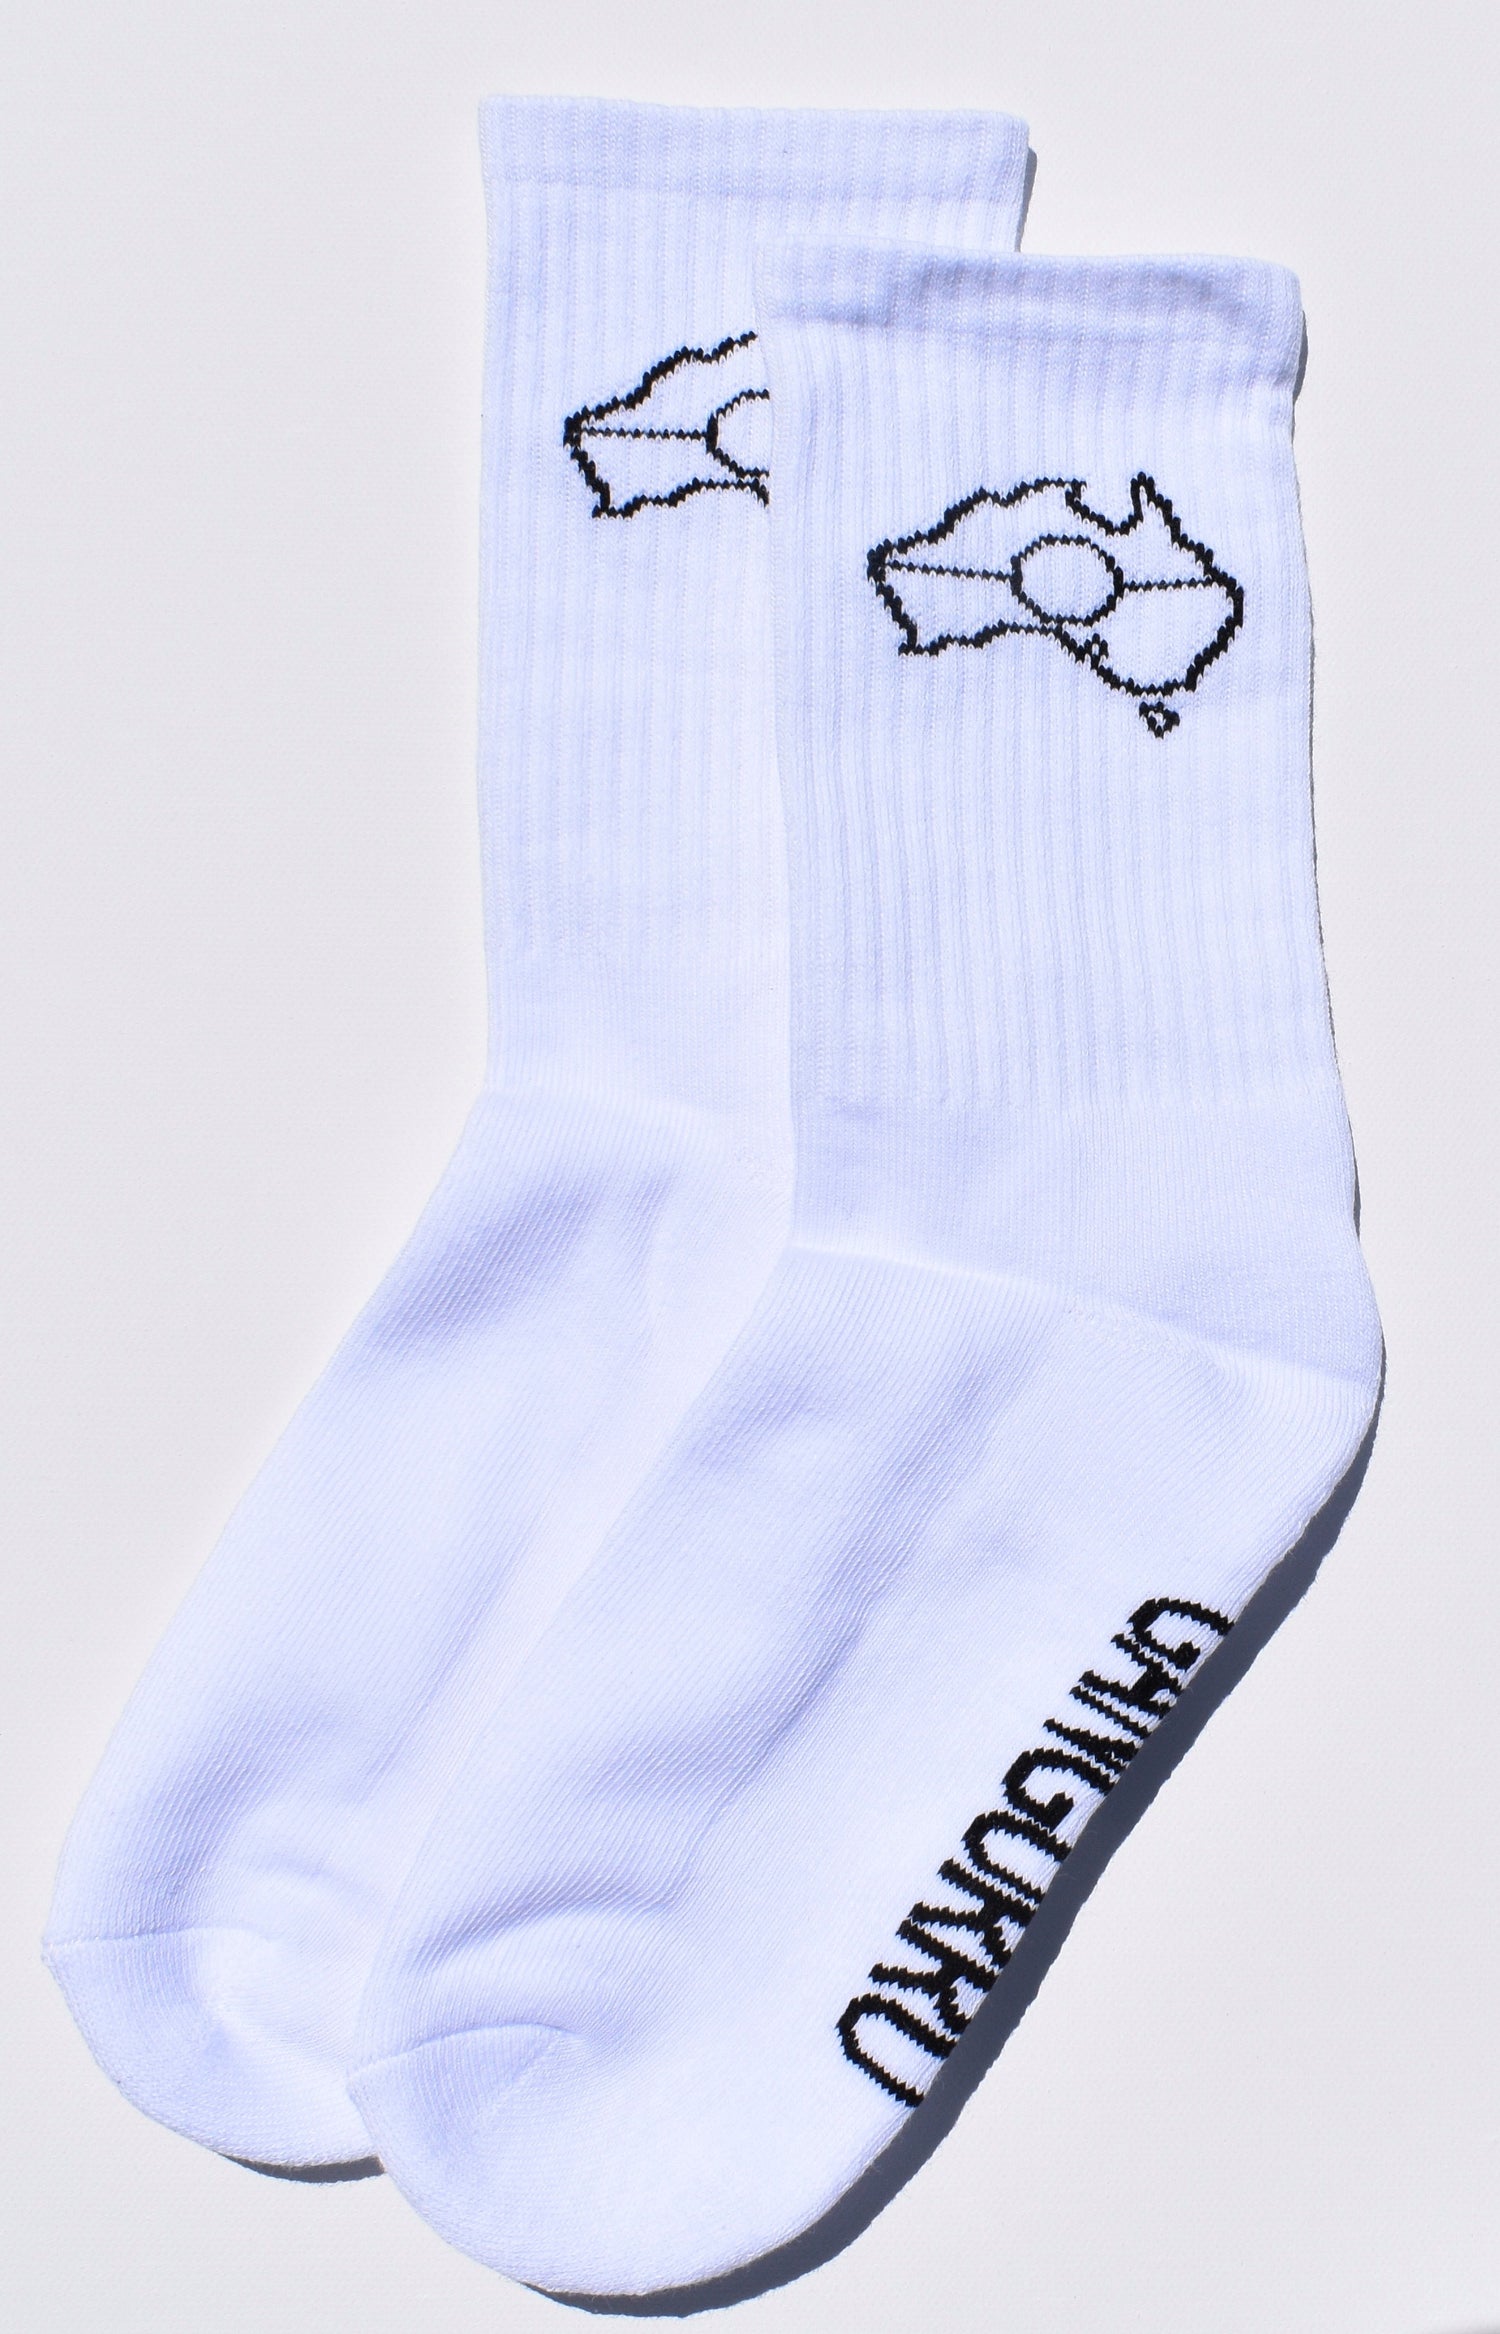 Australia Socks White (2 pairs)